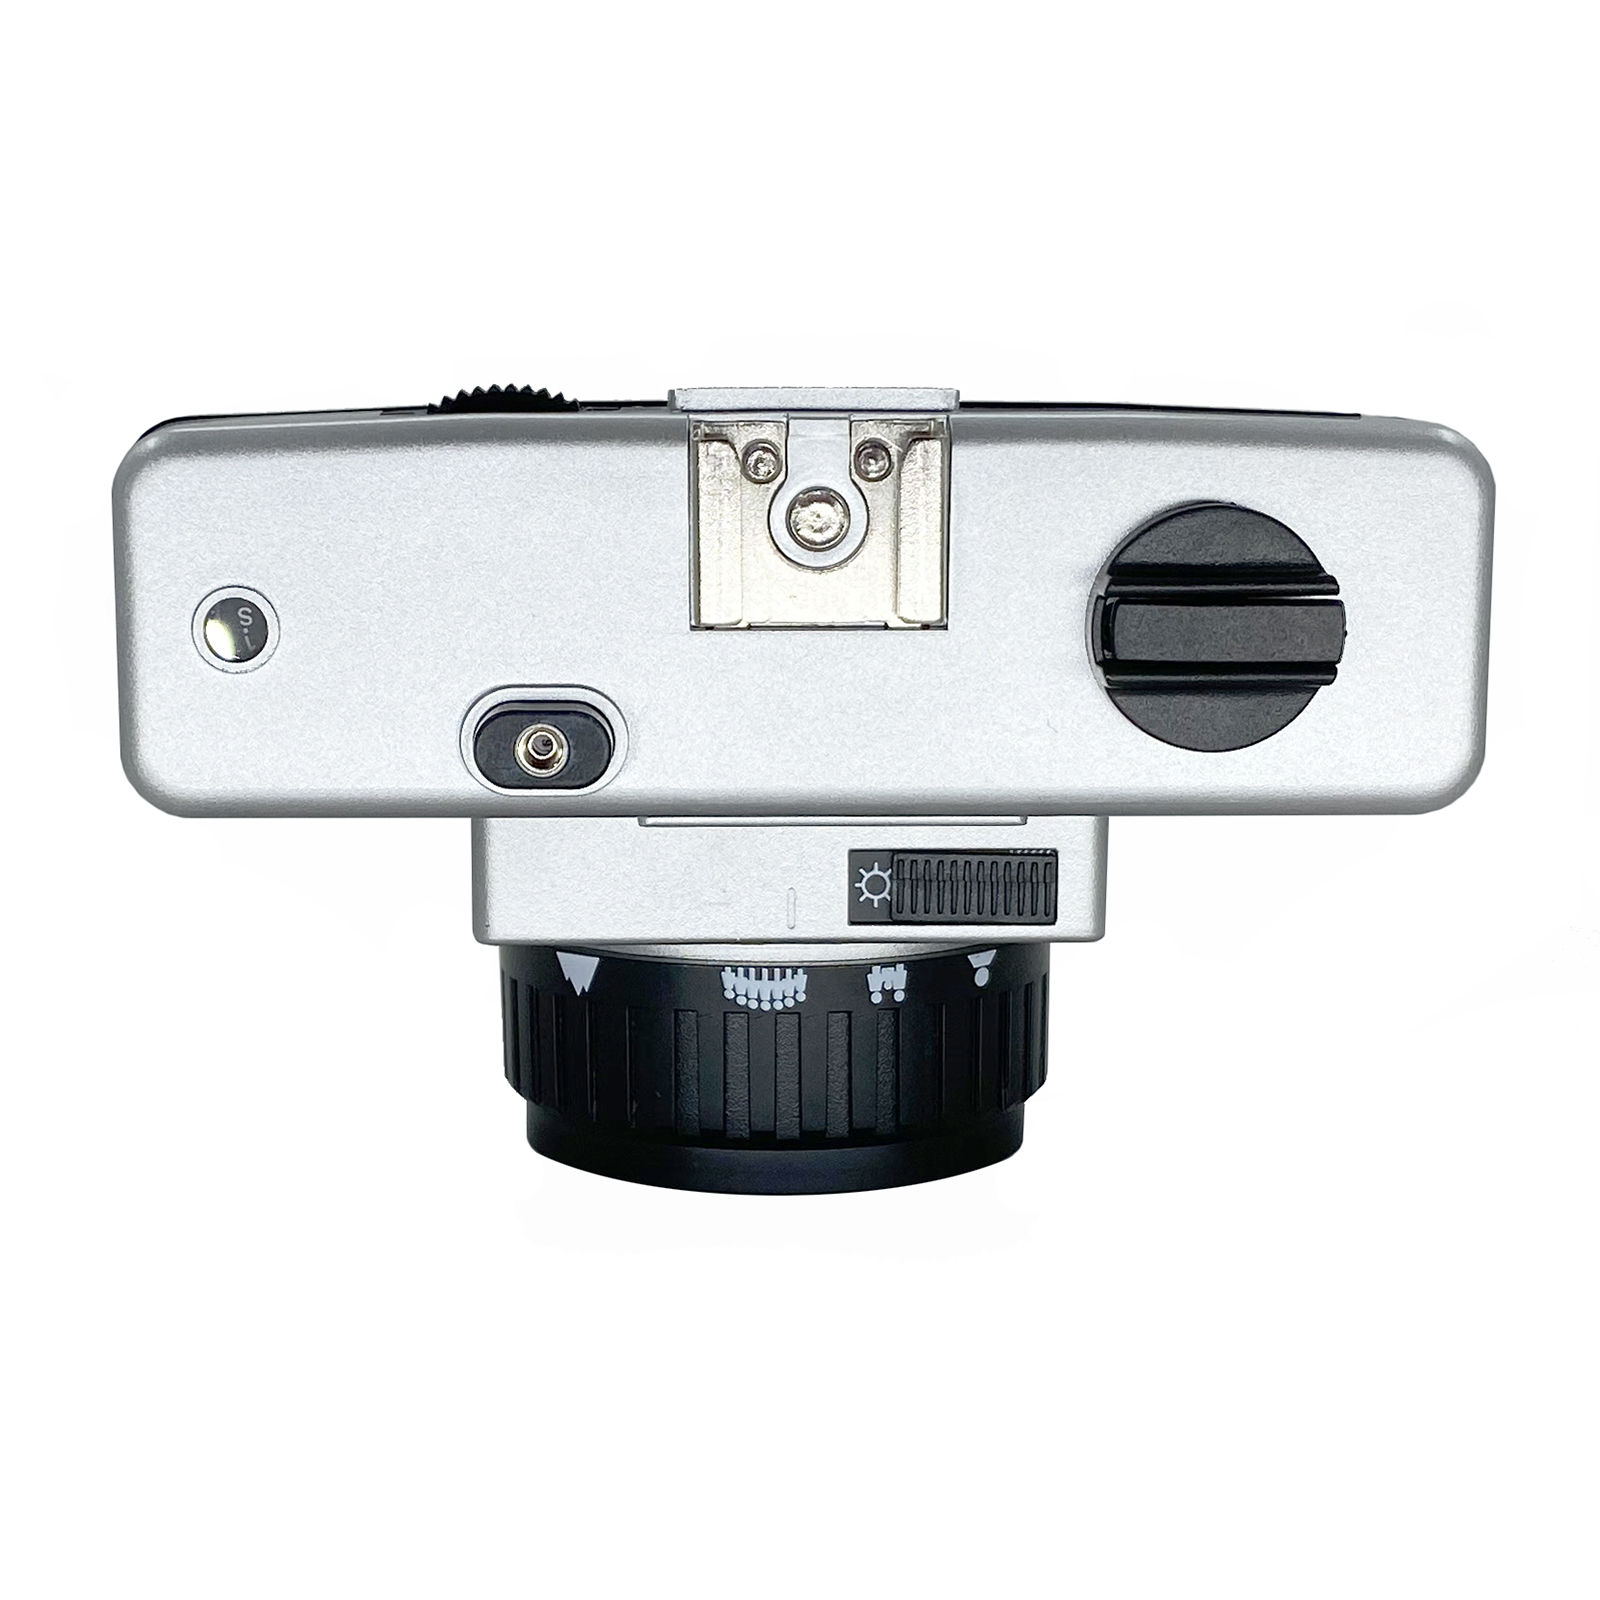 Silver/Black Holga 135BC Film Camera